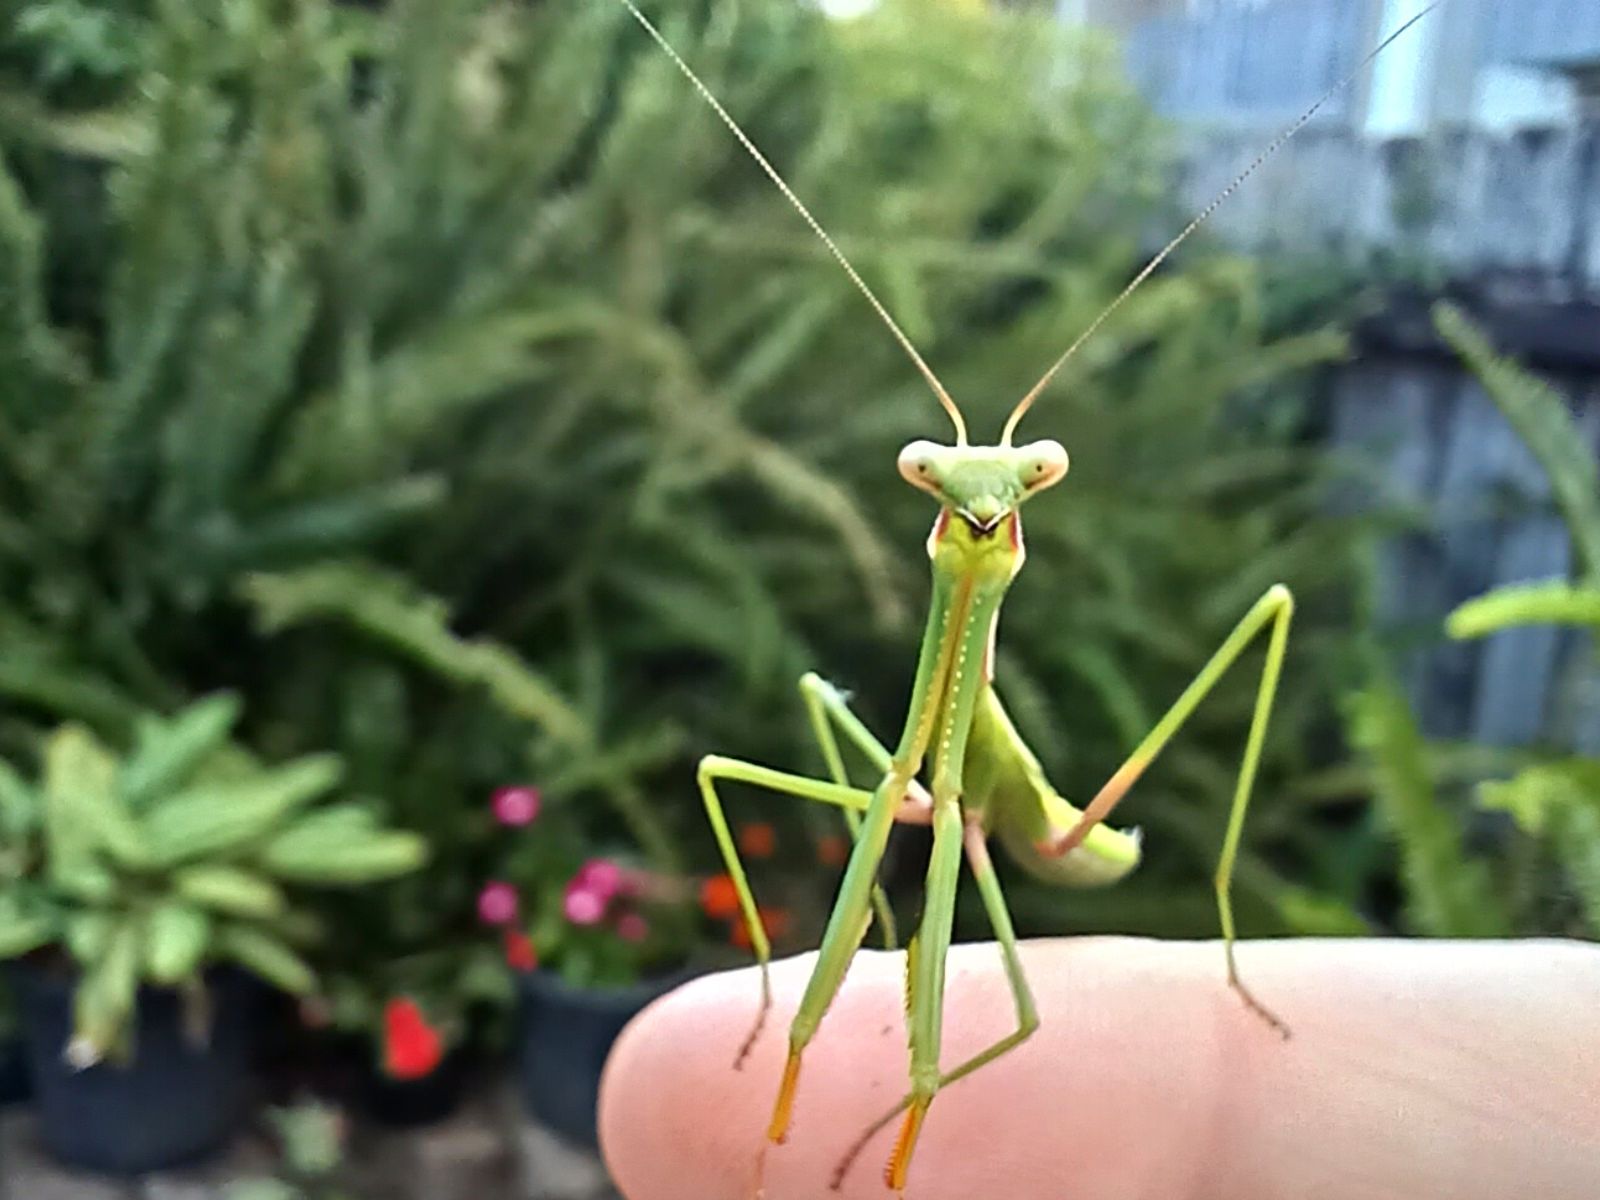 A praying mantis on a finger